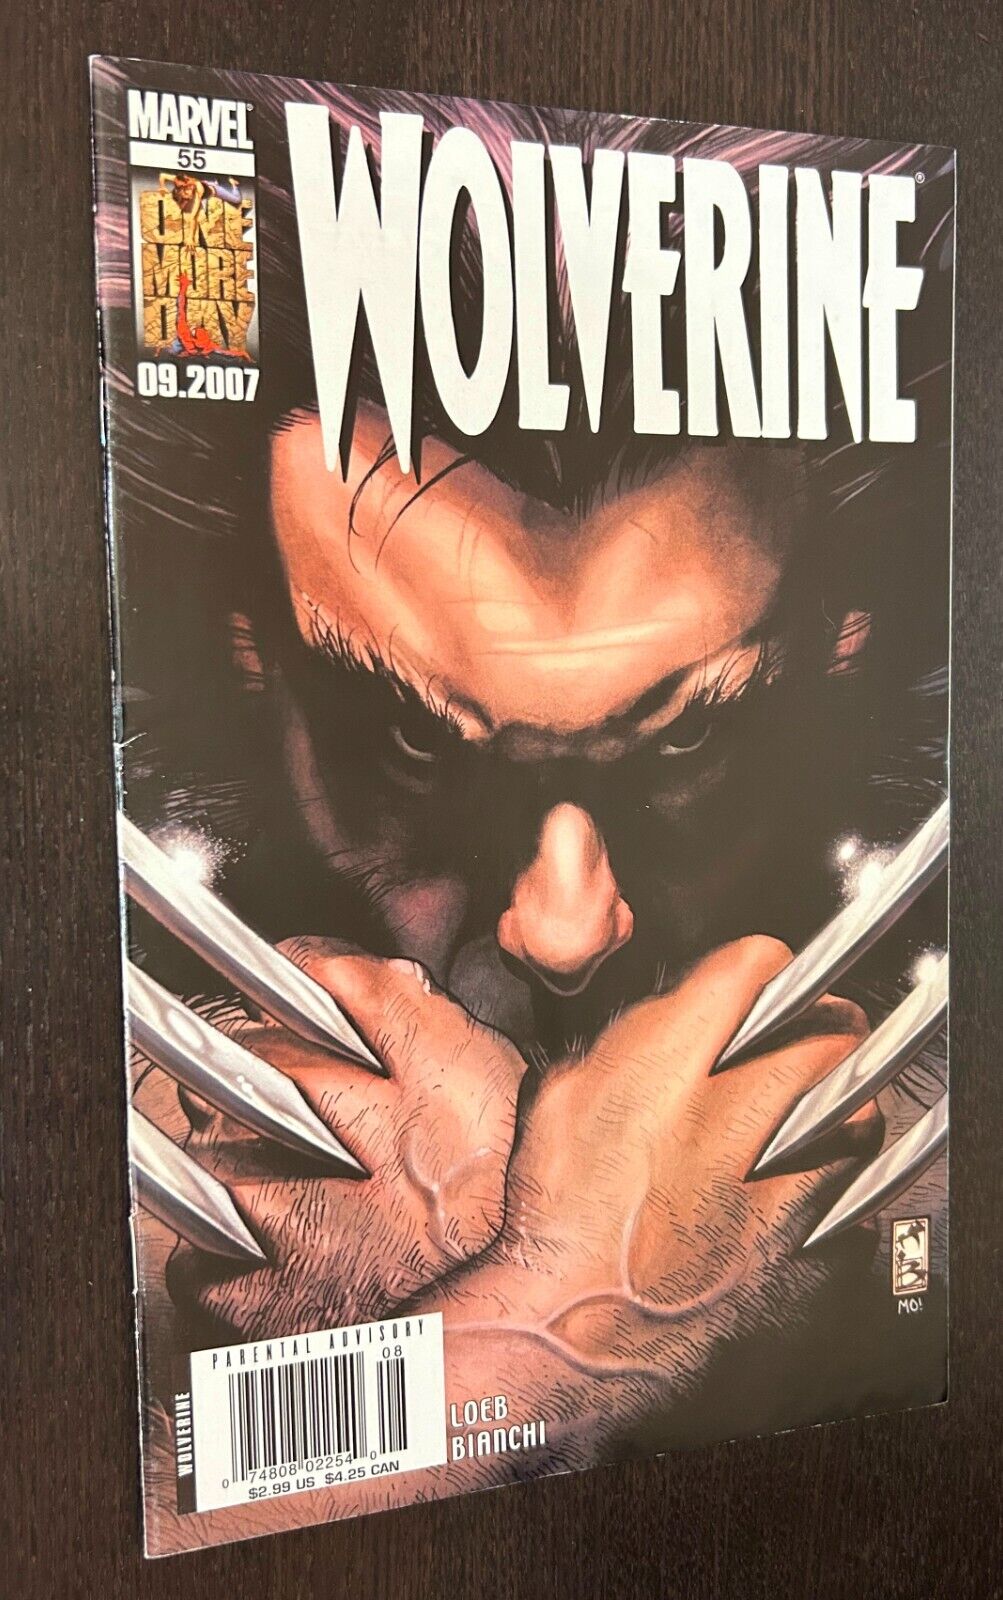 WOLVERINE #55 (Marvel Comics 2007) -- NEWSSTAND VARIANT -- FN